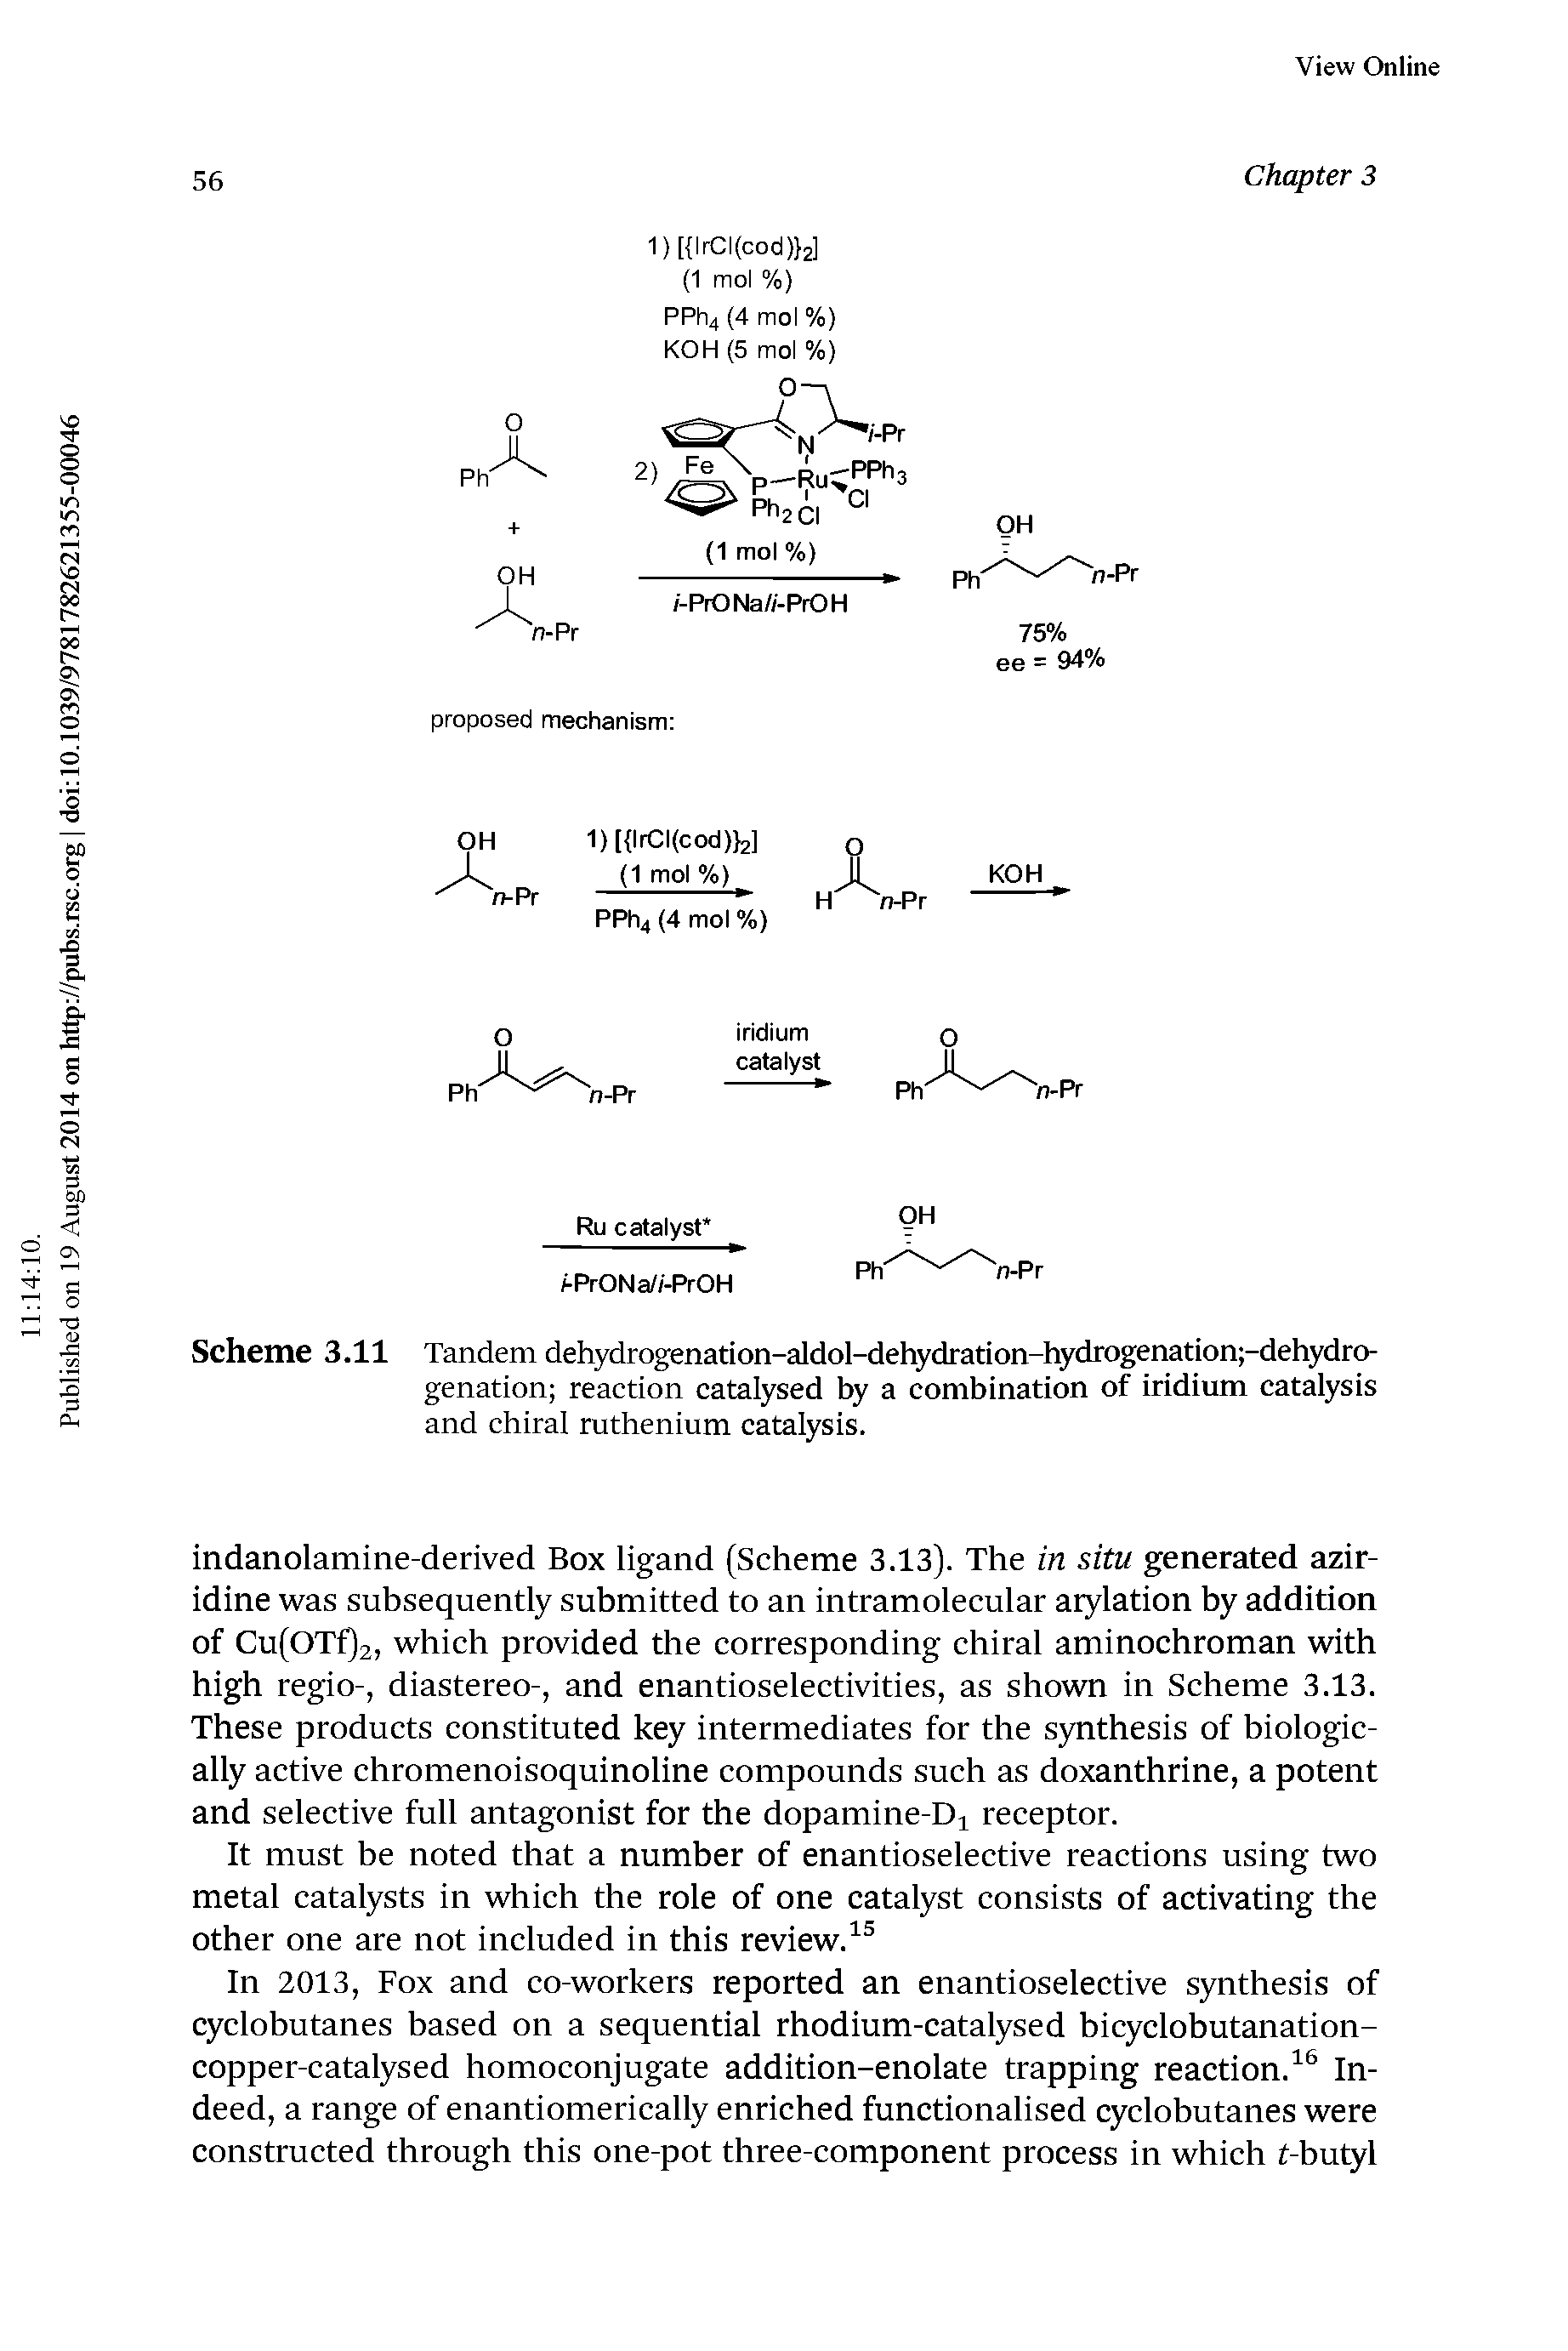 Scheme 3.11 Tandem dehydrogenation-aldol-dehydration-hydrogenation -dehydro-genation reaction catalysed by a combination of iridium catalysis and chiral ruthenium catalysis.